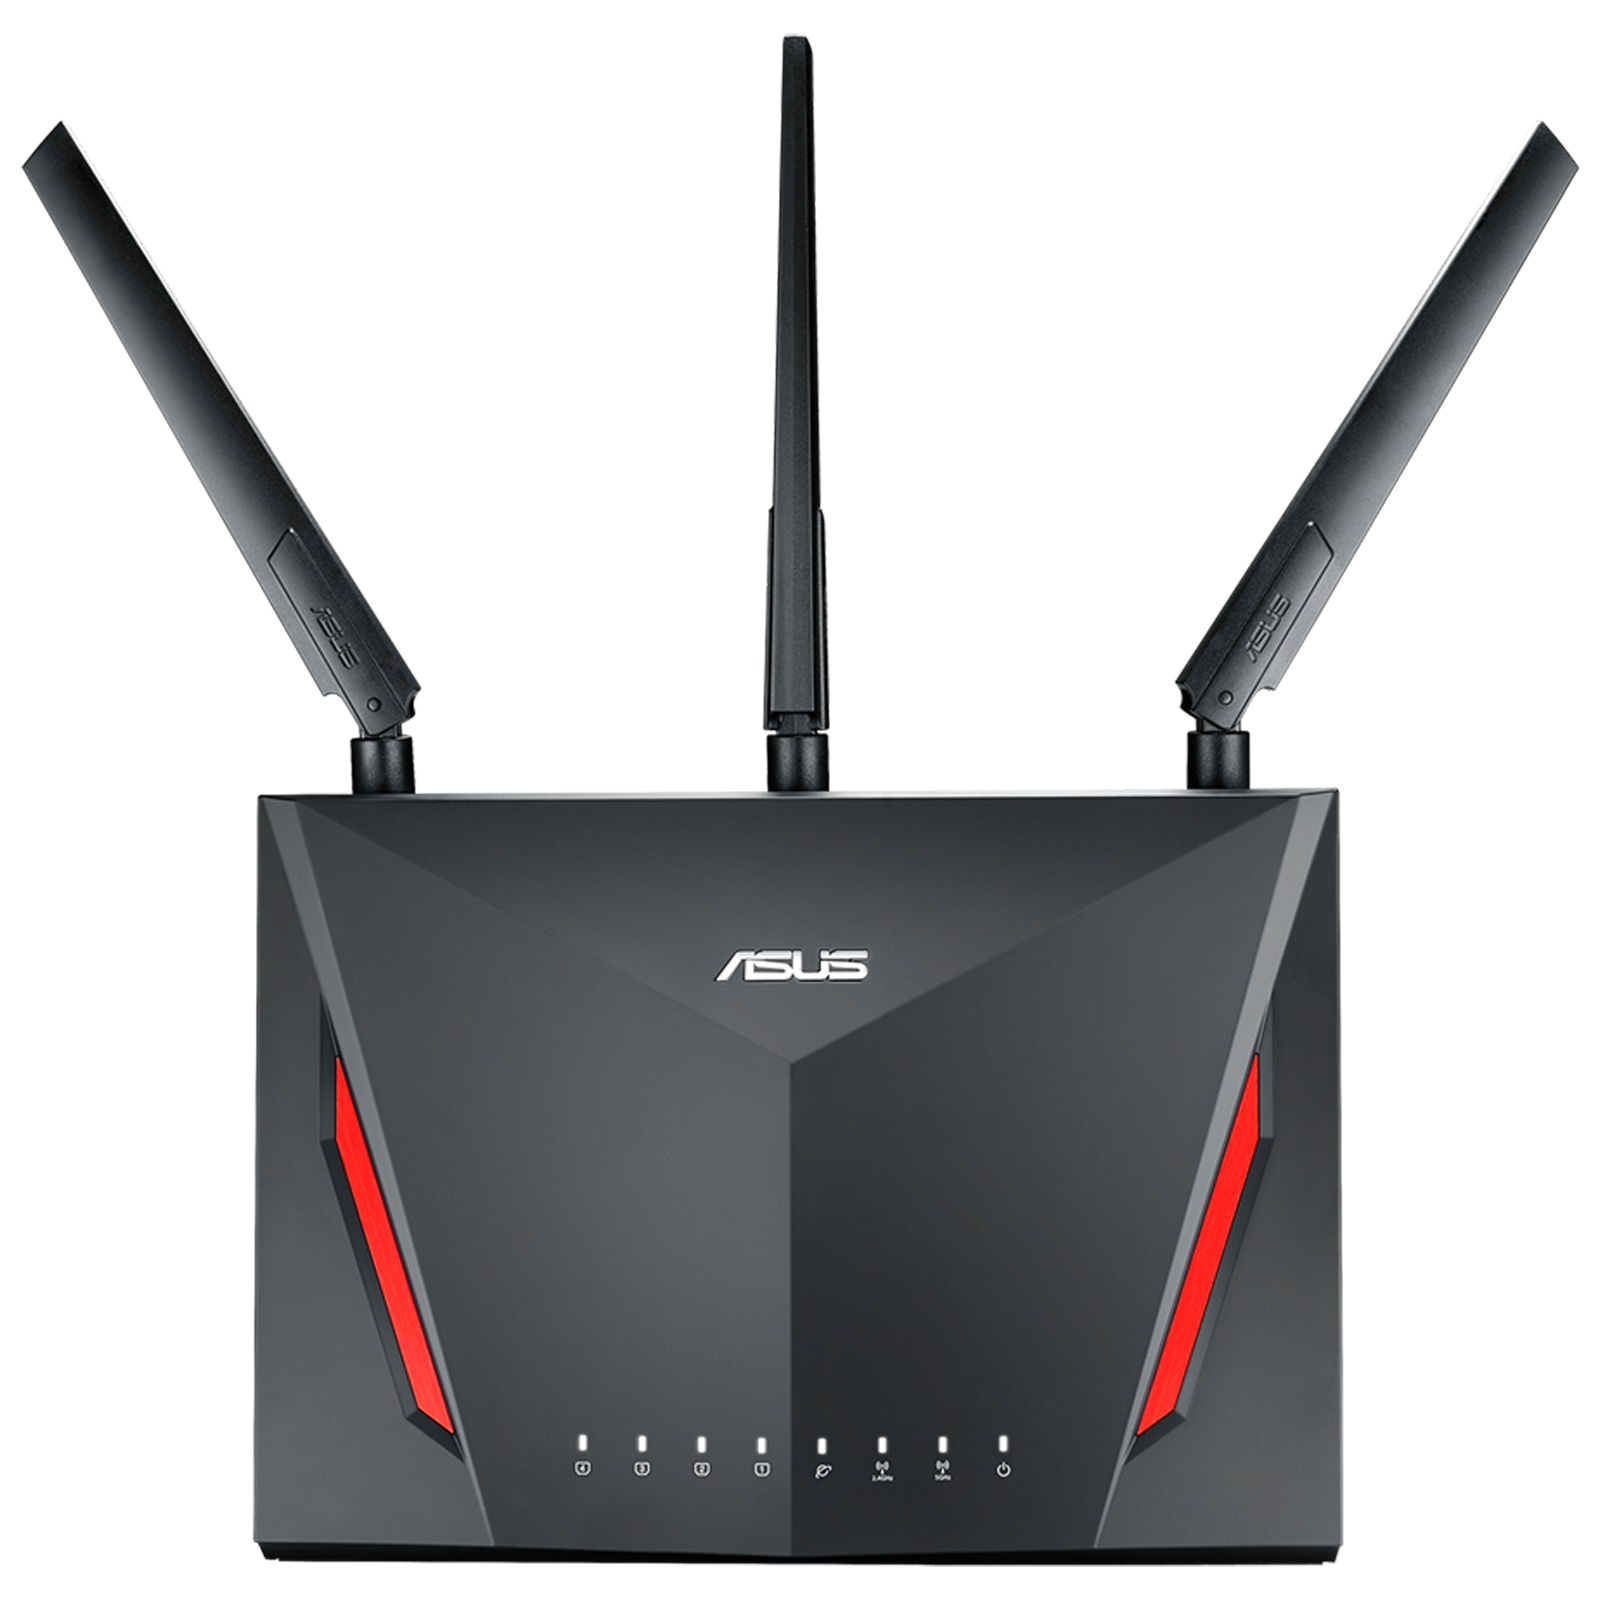 Asus AC2900 Dual Band 2167 Mbps Wi-Fi Router (4 Antennas, 4 LAN Ports, AiProtection Pro, RT-AC86U, Black)_1